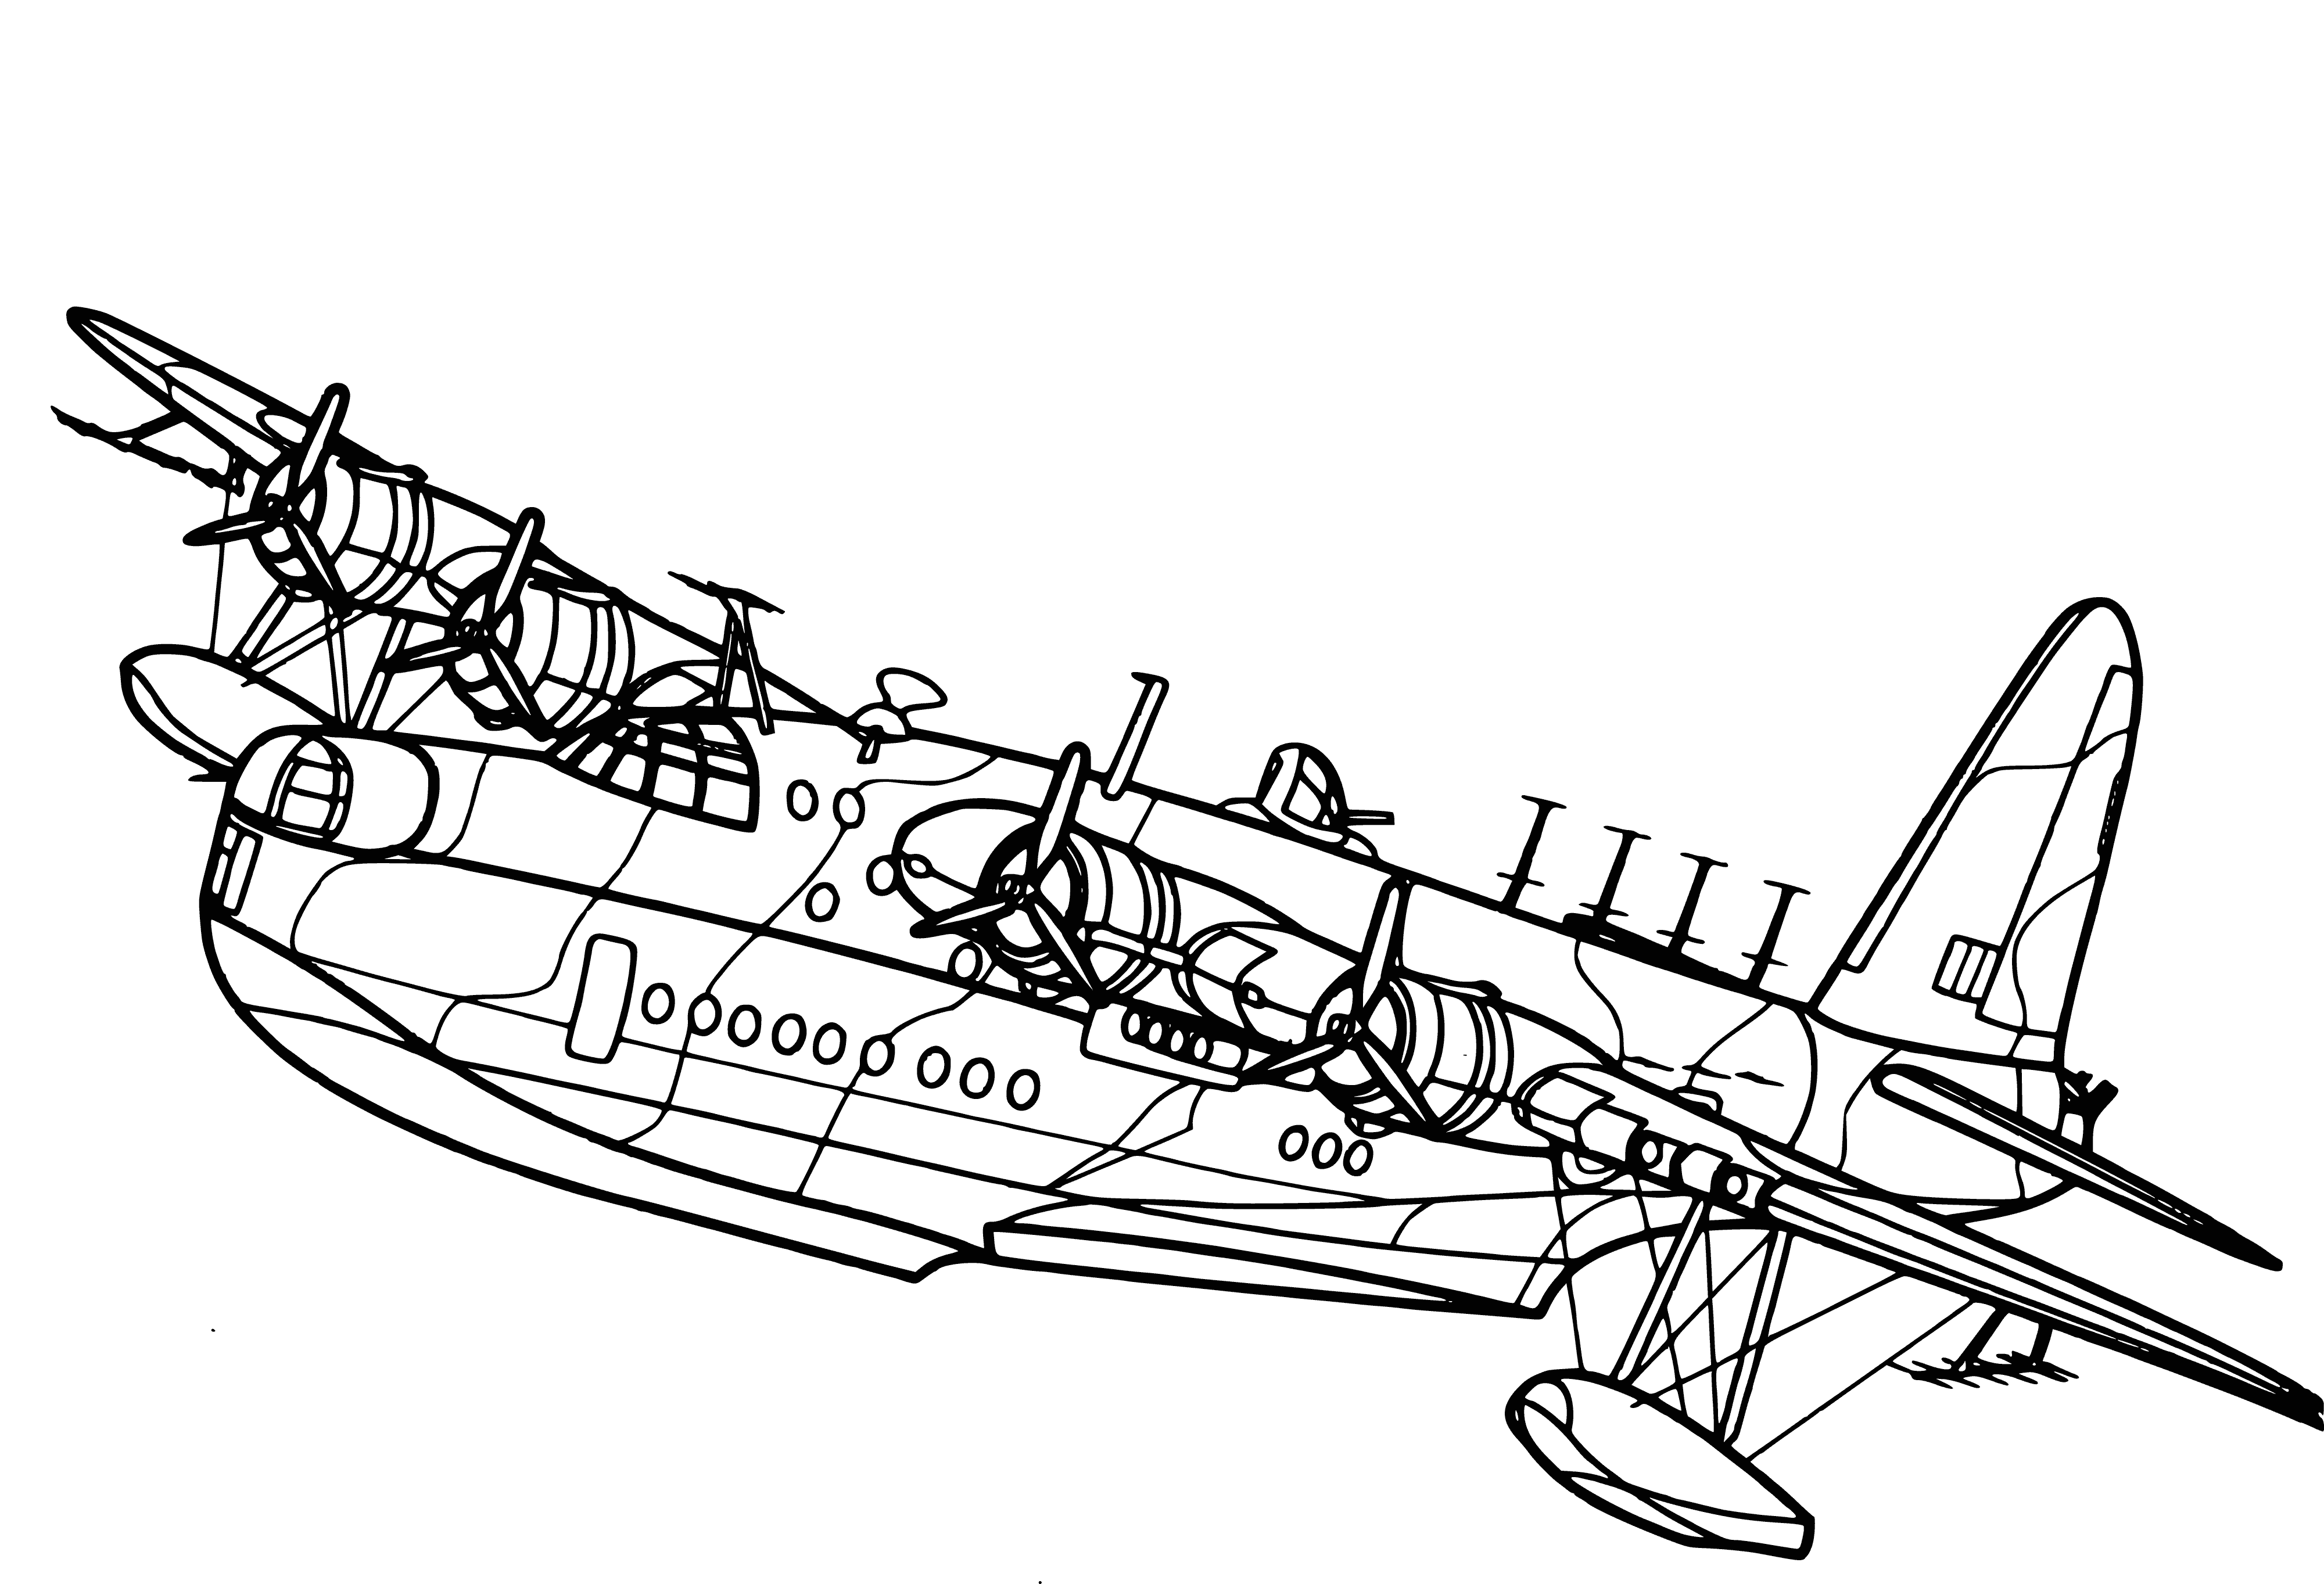 Bomber Short Sunderland 2 coloring page